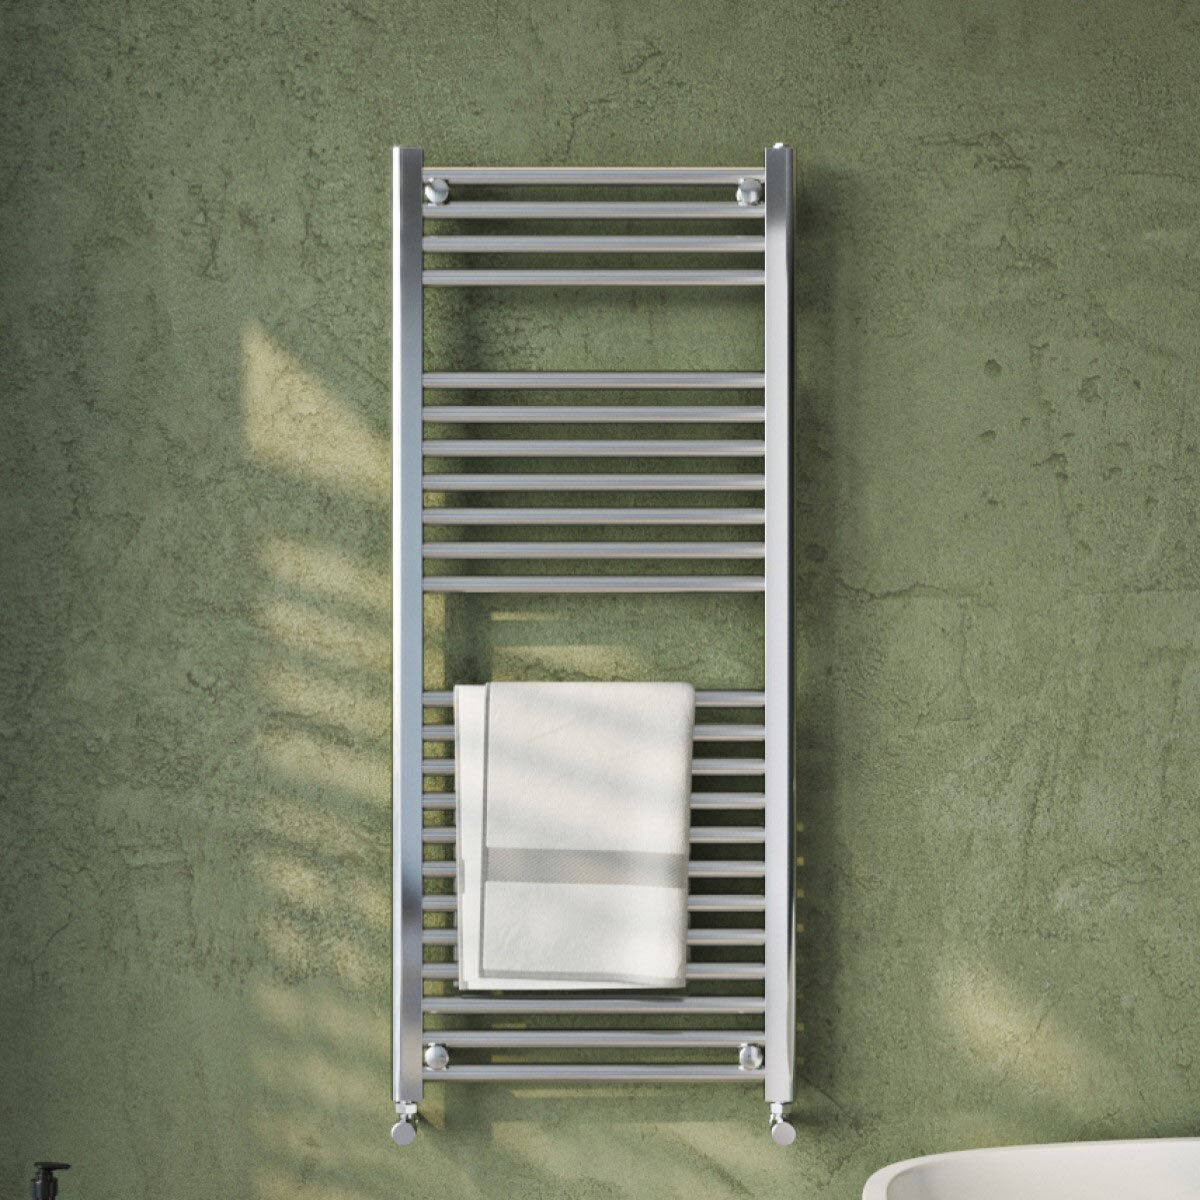 Lifestyle image of radiator in bathroom setting